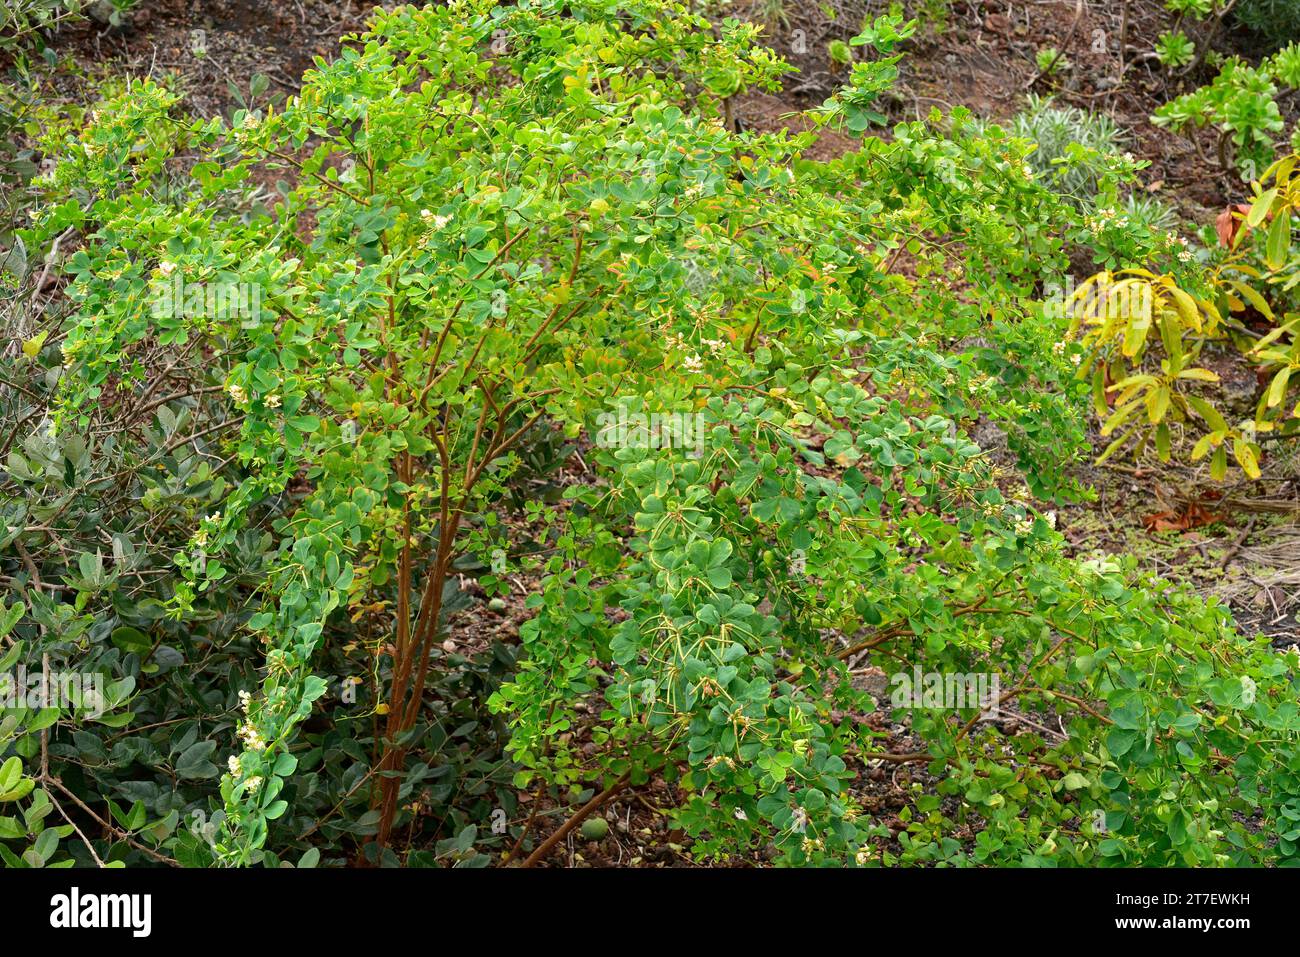 Trebol de risco de Broussonet (Dorycnium broussonetii) is a shrub endemic to Gran Canaria and Tenerife, Canary Islands, Spain. Stock Photo